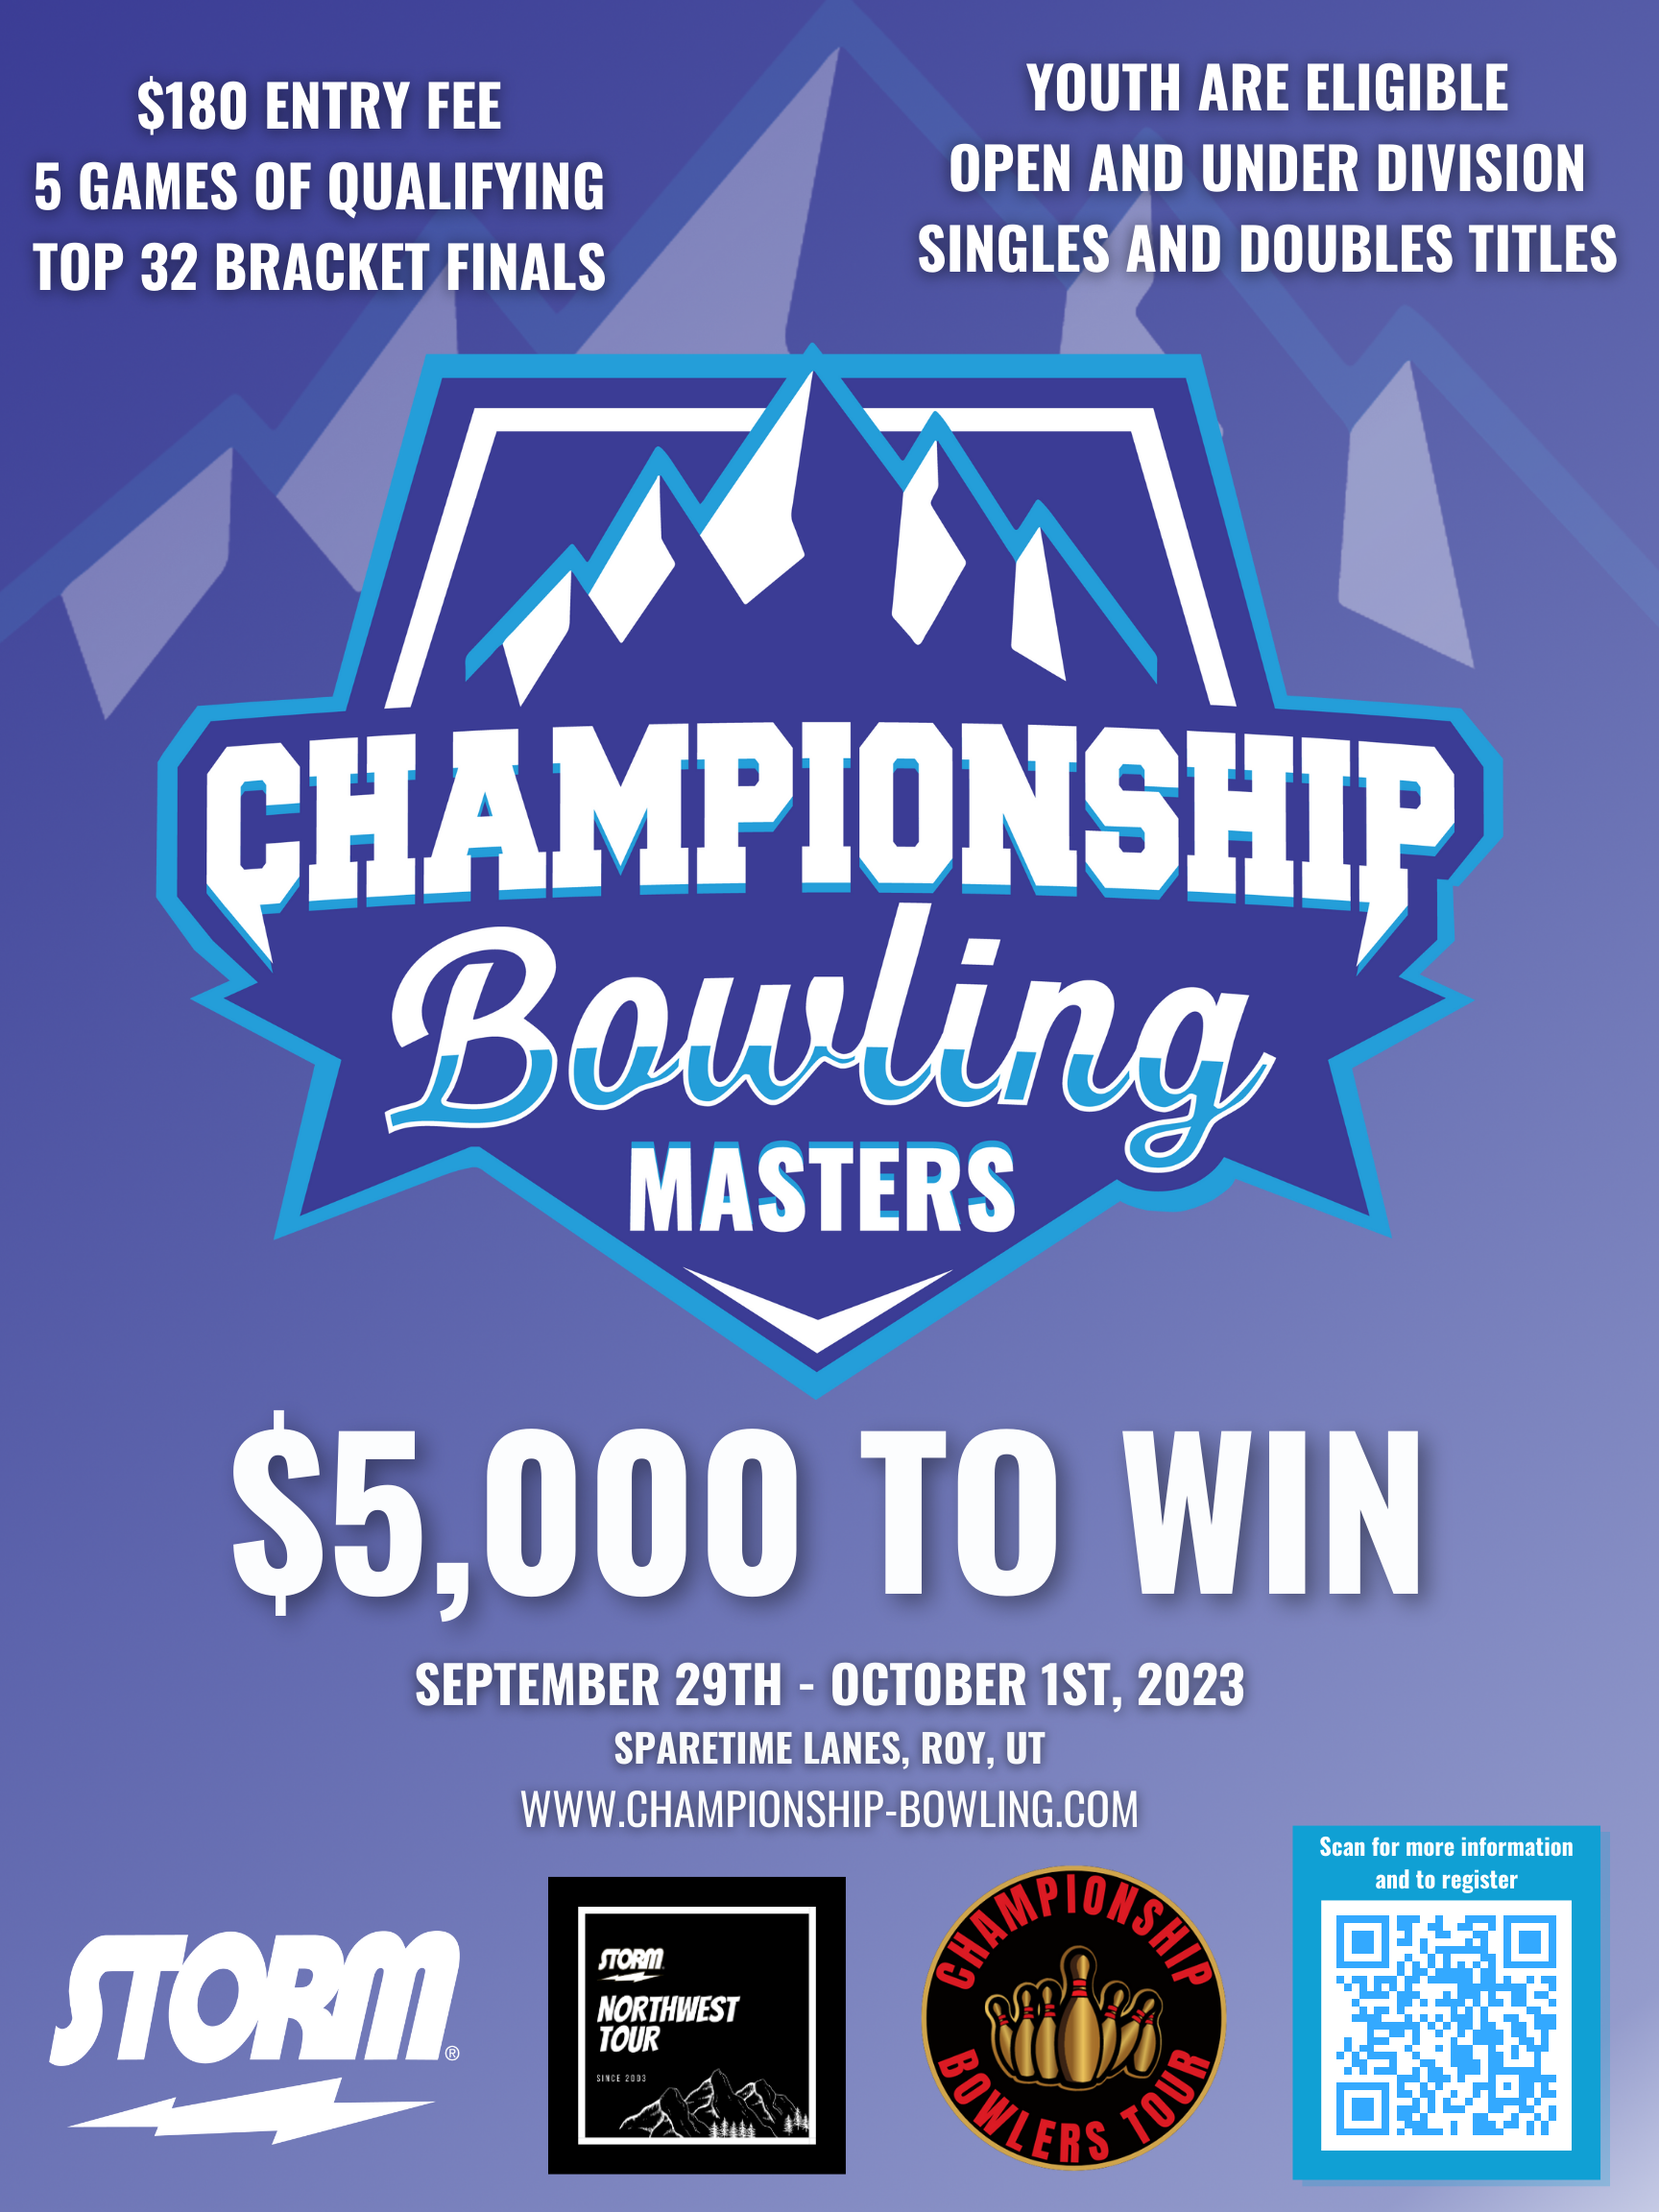 2023 Championship Bowling Masters Friday Qualifying 